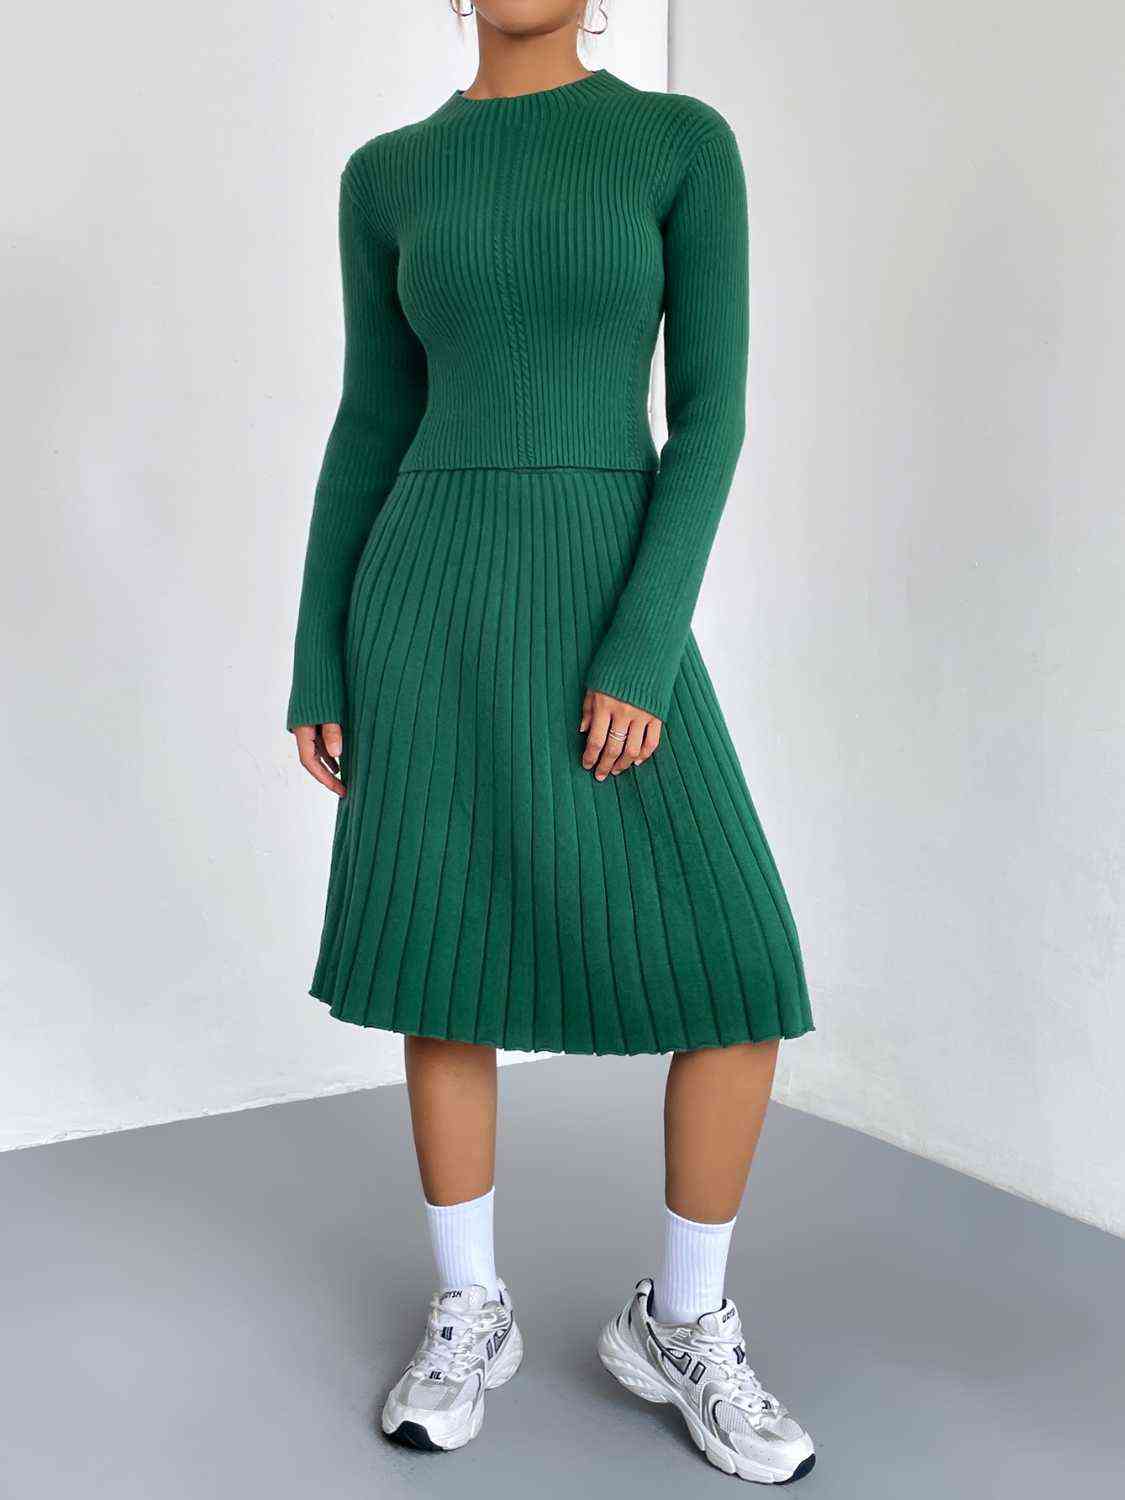 Women's Rib-Knit Sweater and Skirt Set Green